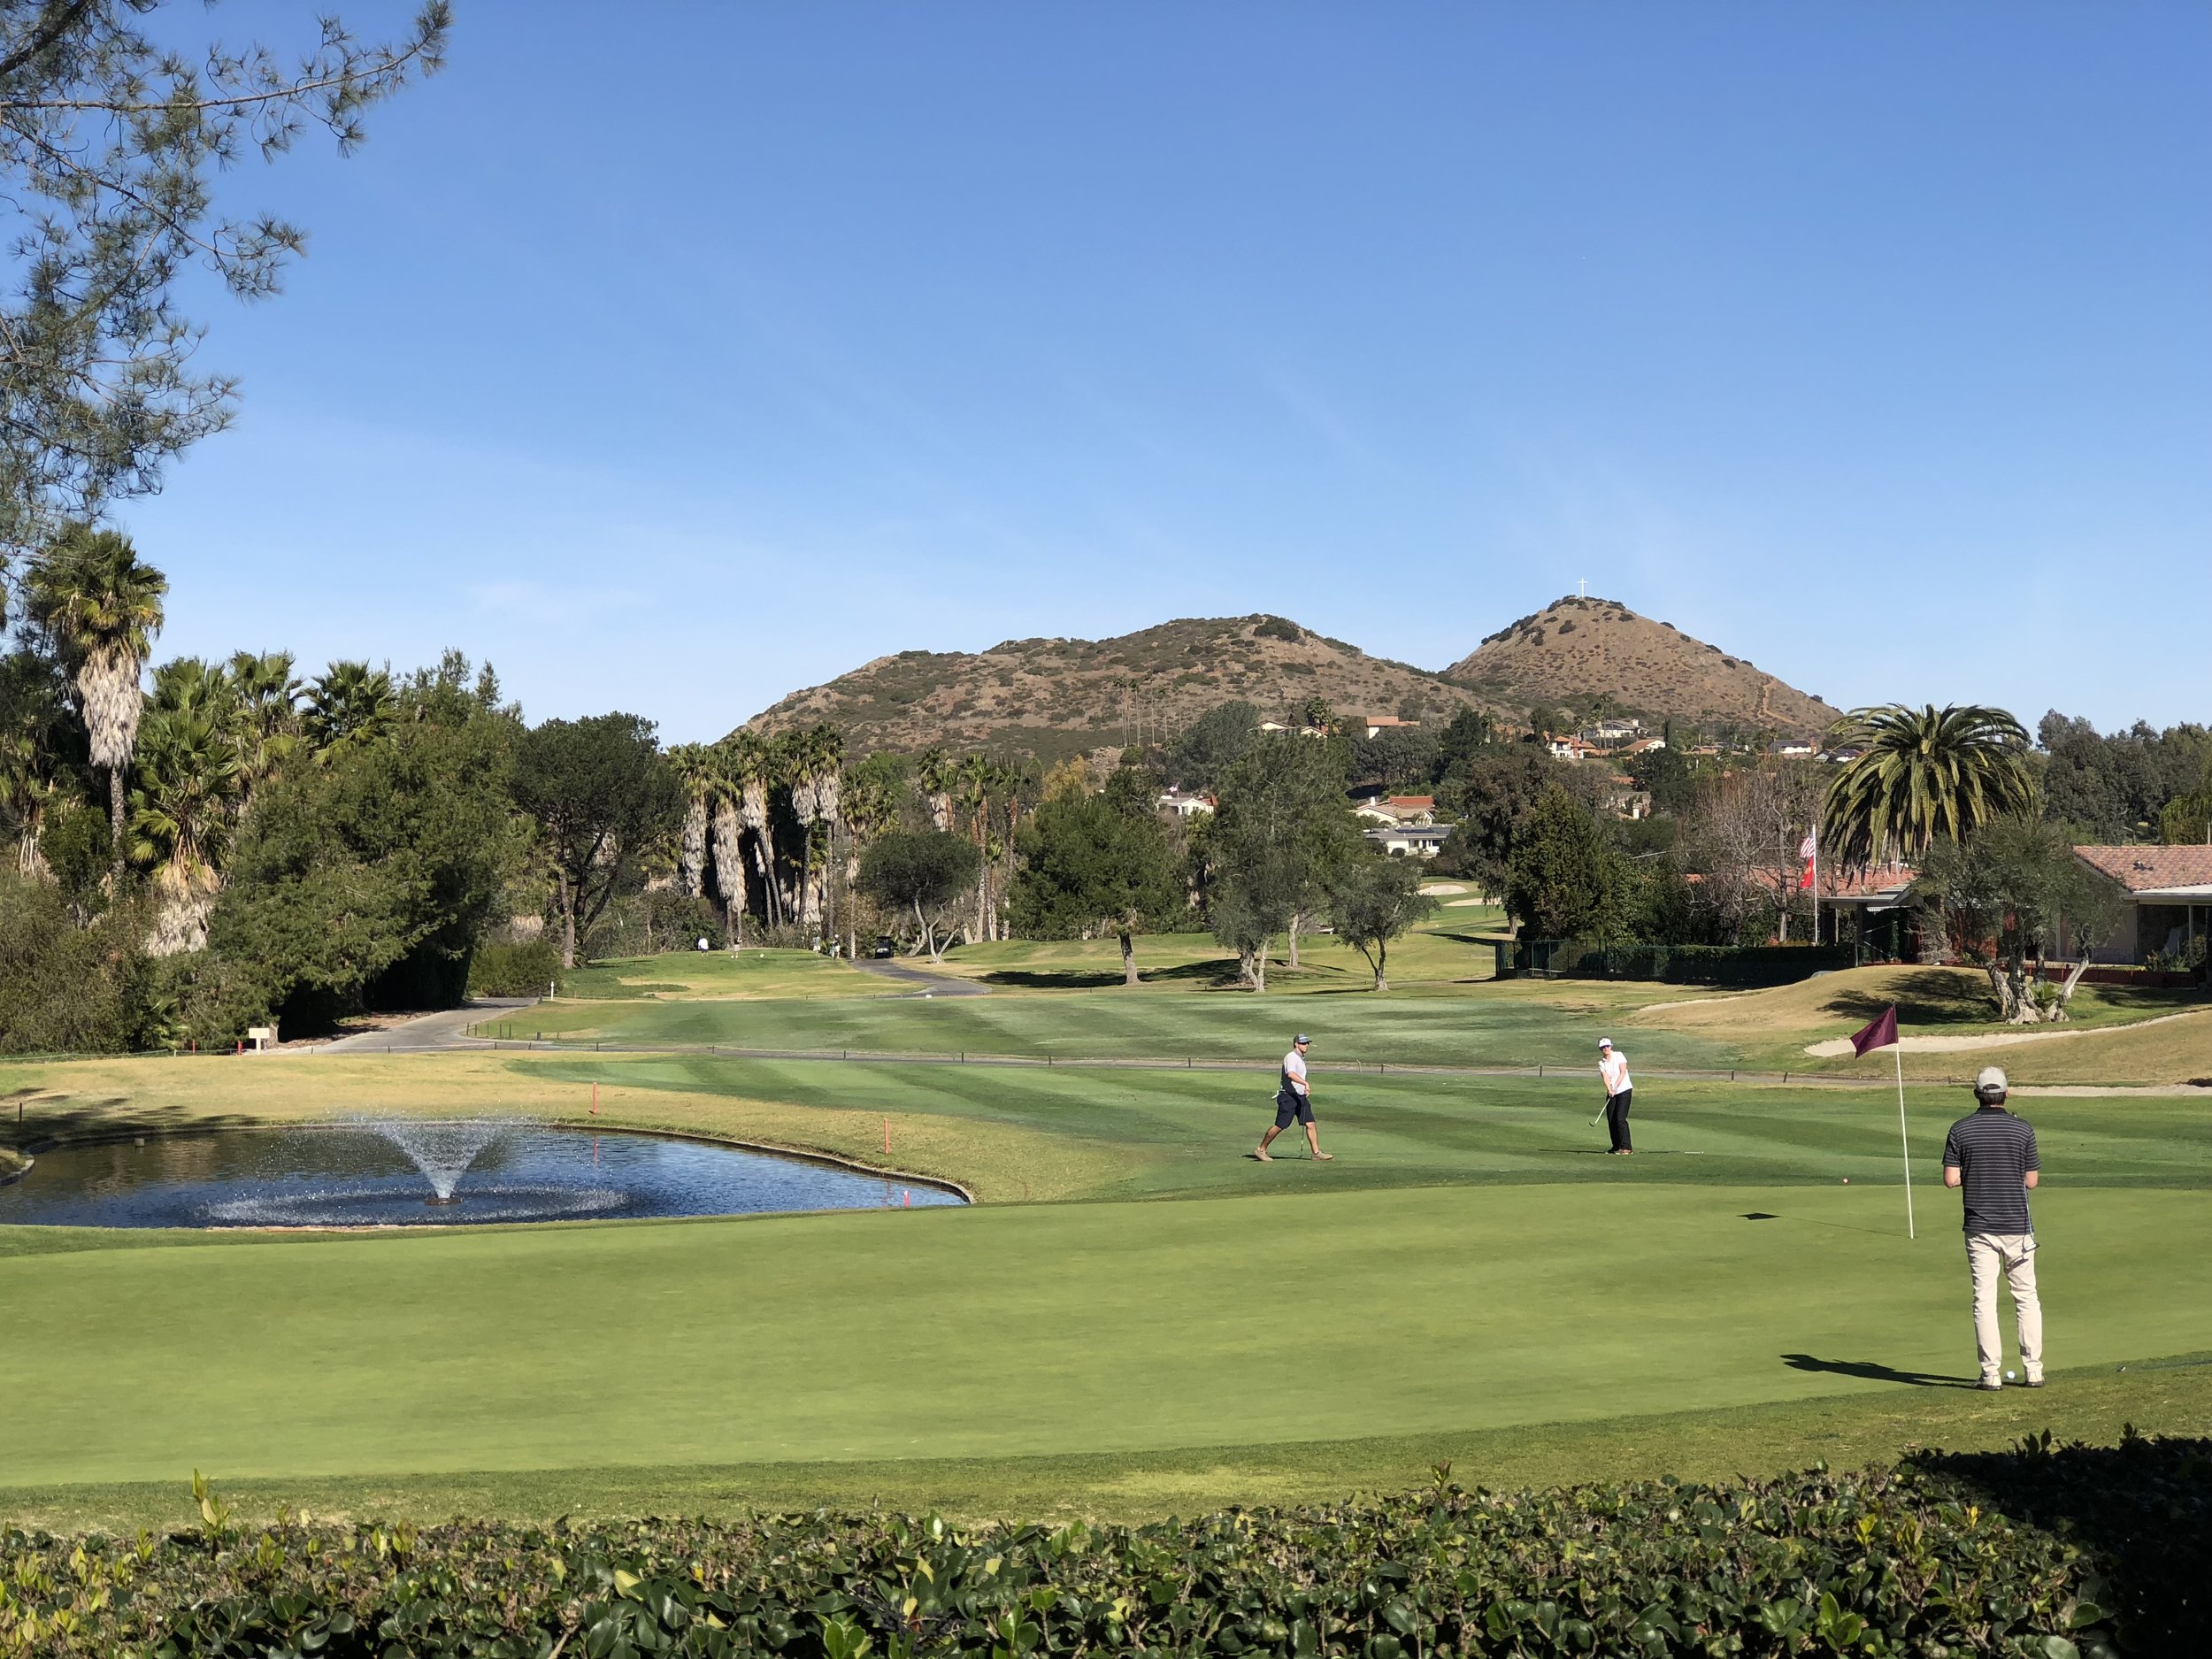  We stayed at Rancho Bernardo Inn, a golf resort about an hour northeast of San Diego. 